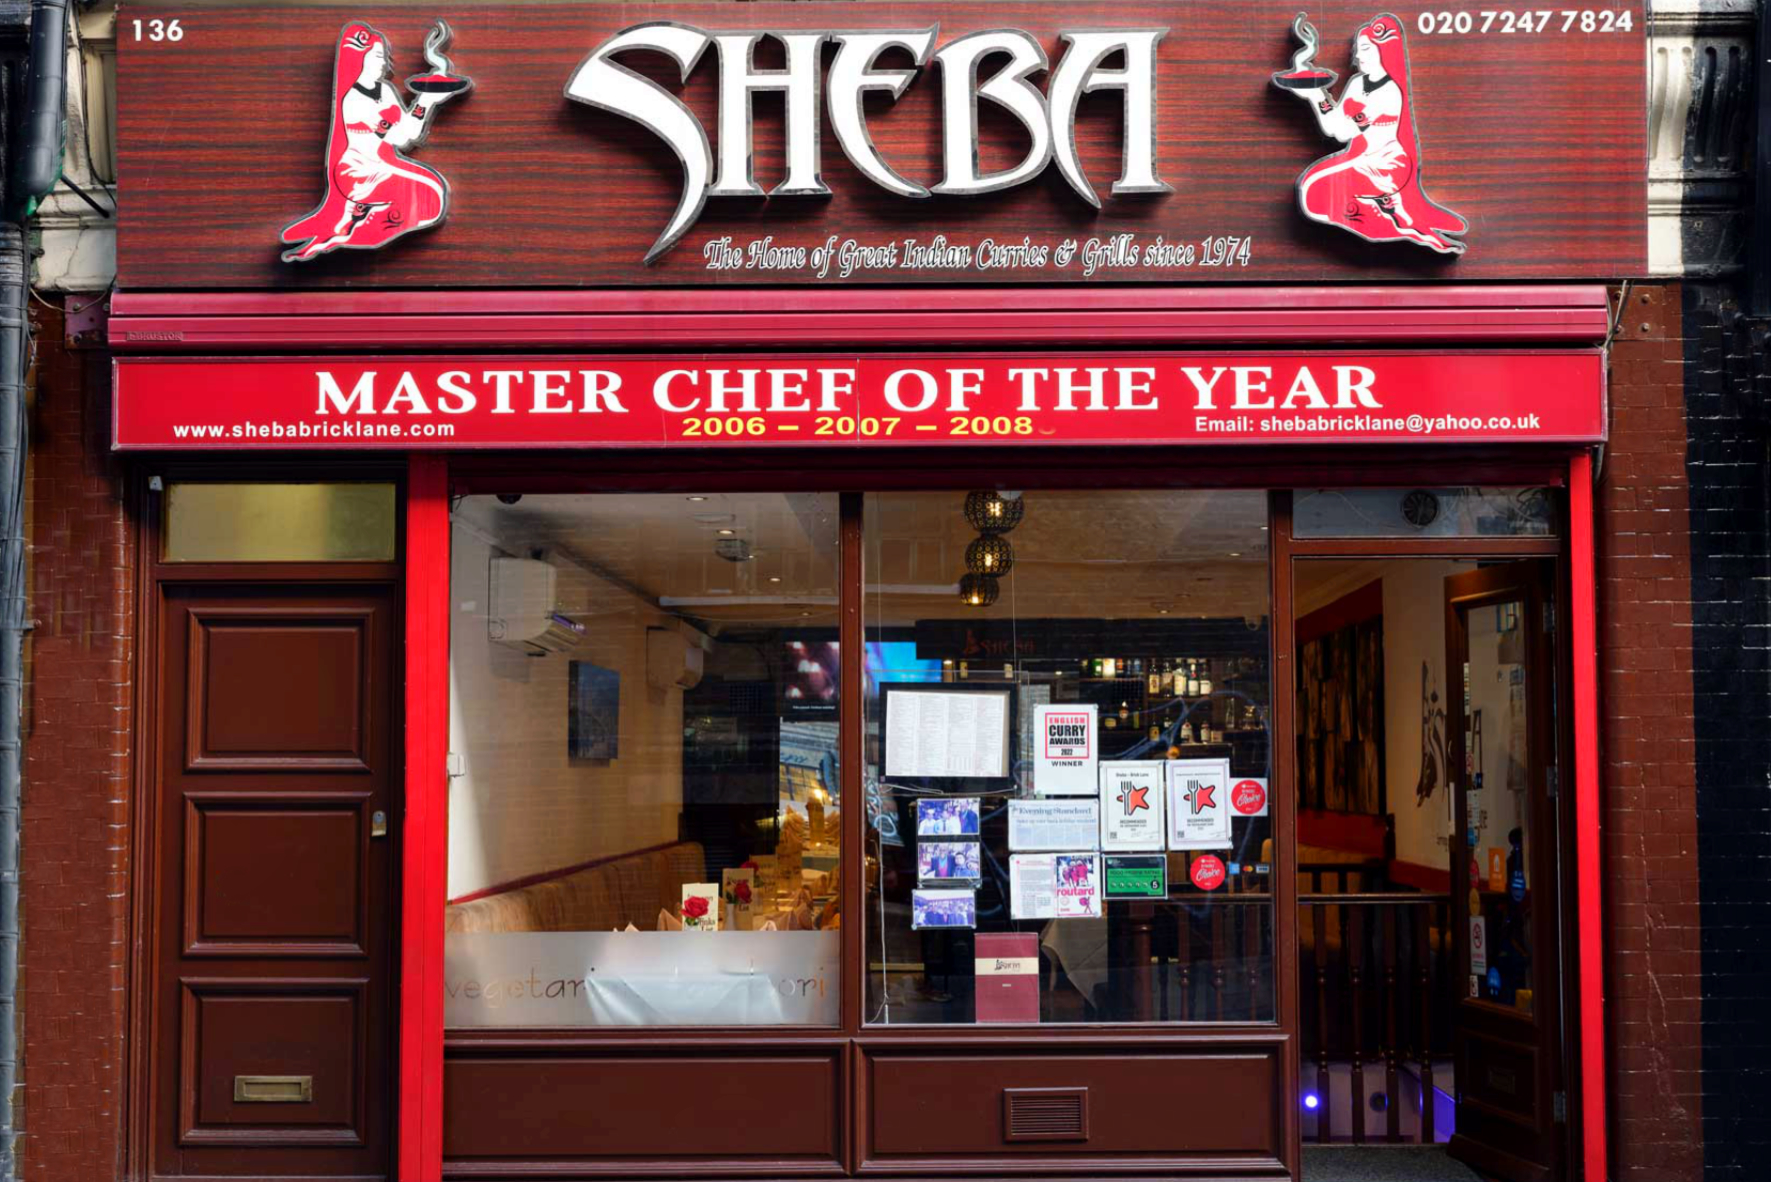 Sheba restaurant, Brick Lane, East End of London.